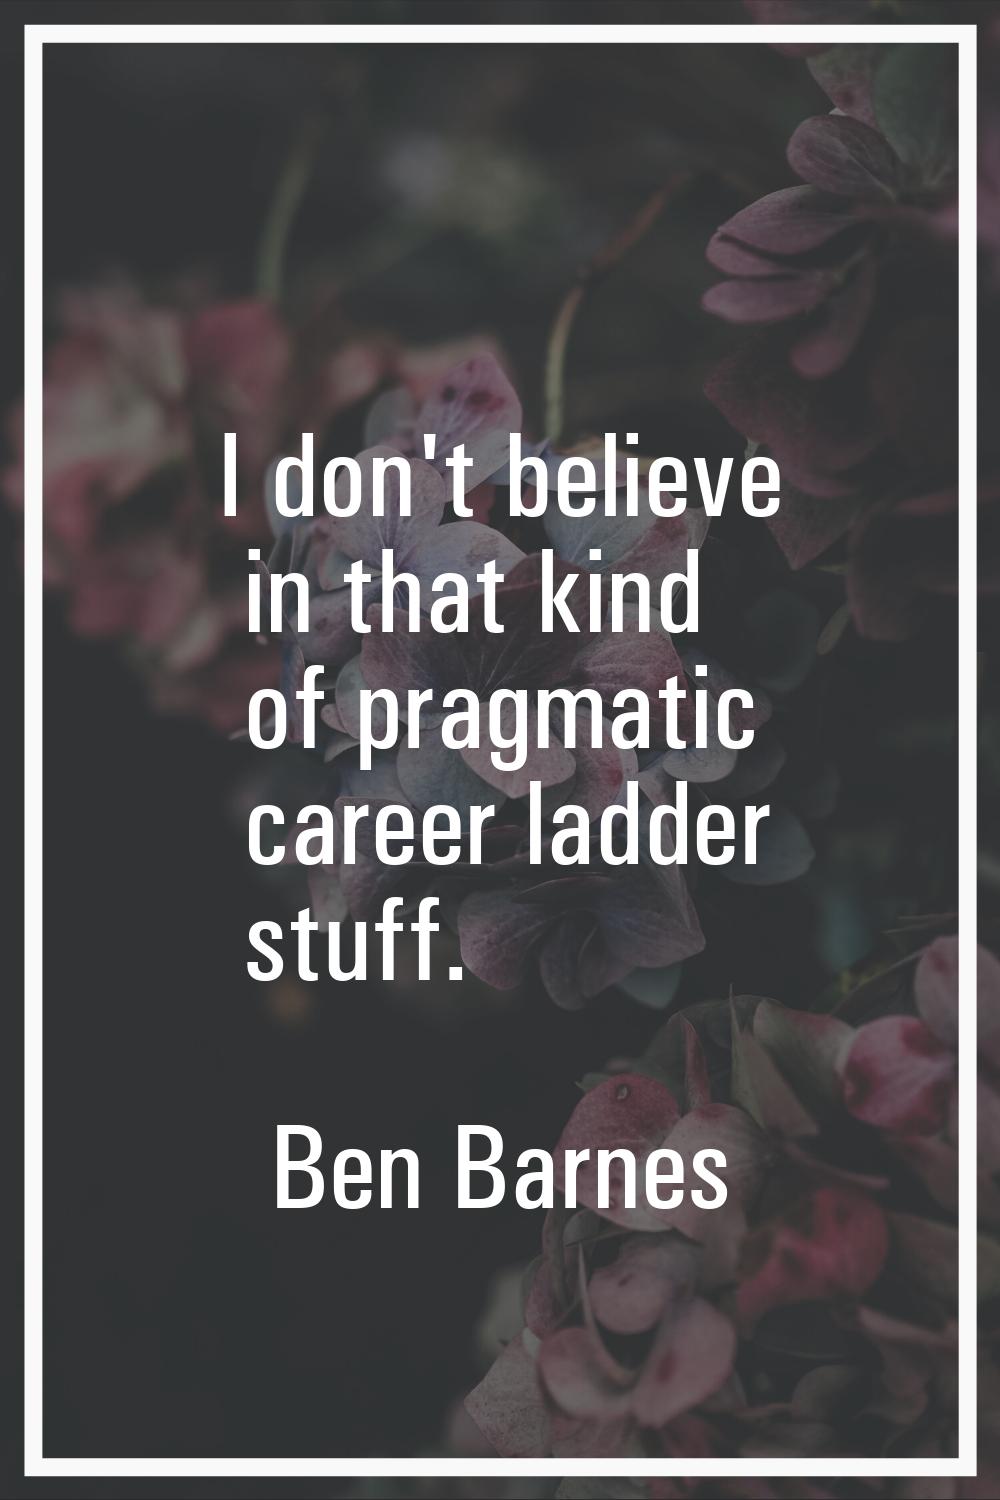 I don't believe in that kind of pragmatic career ladder stuff.